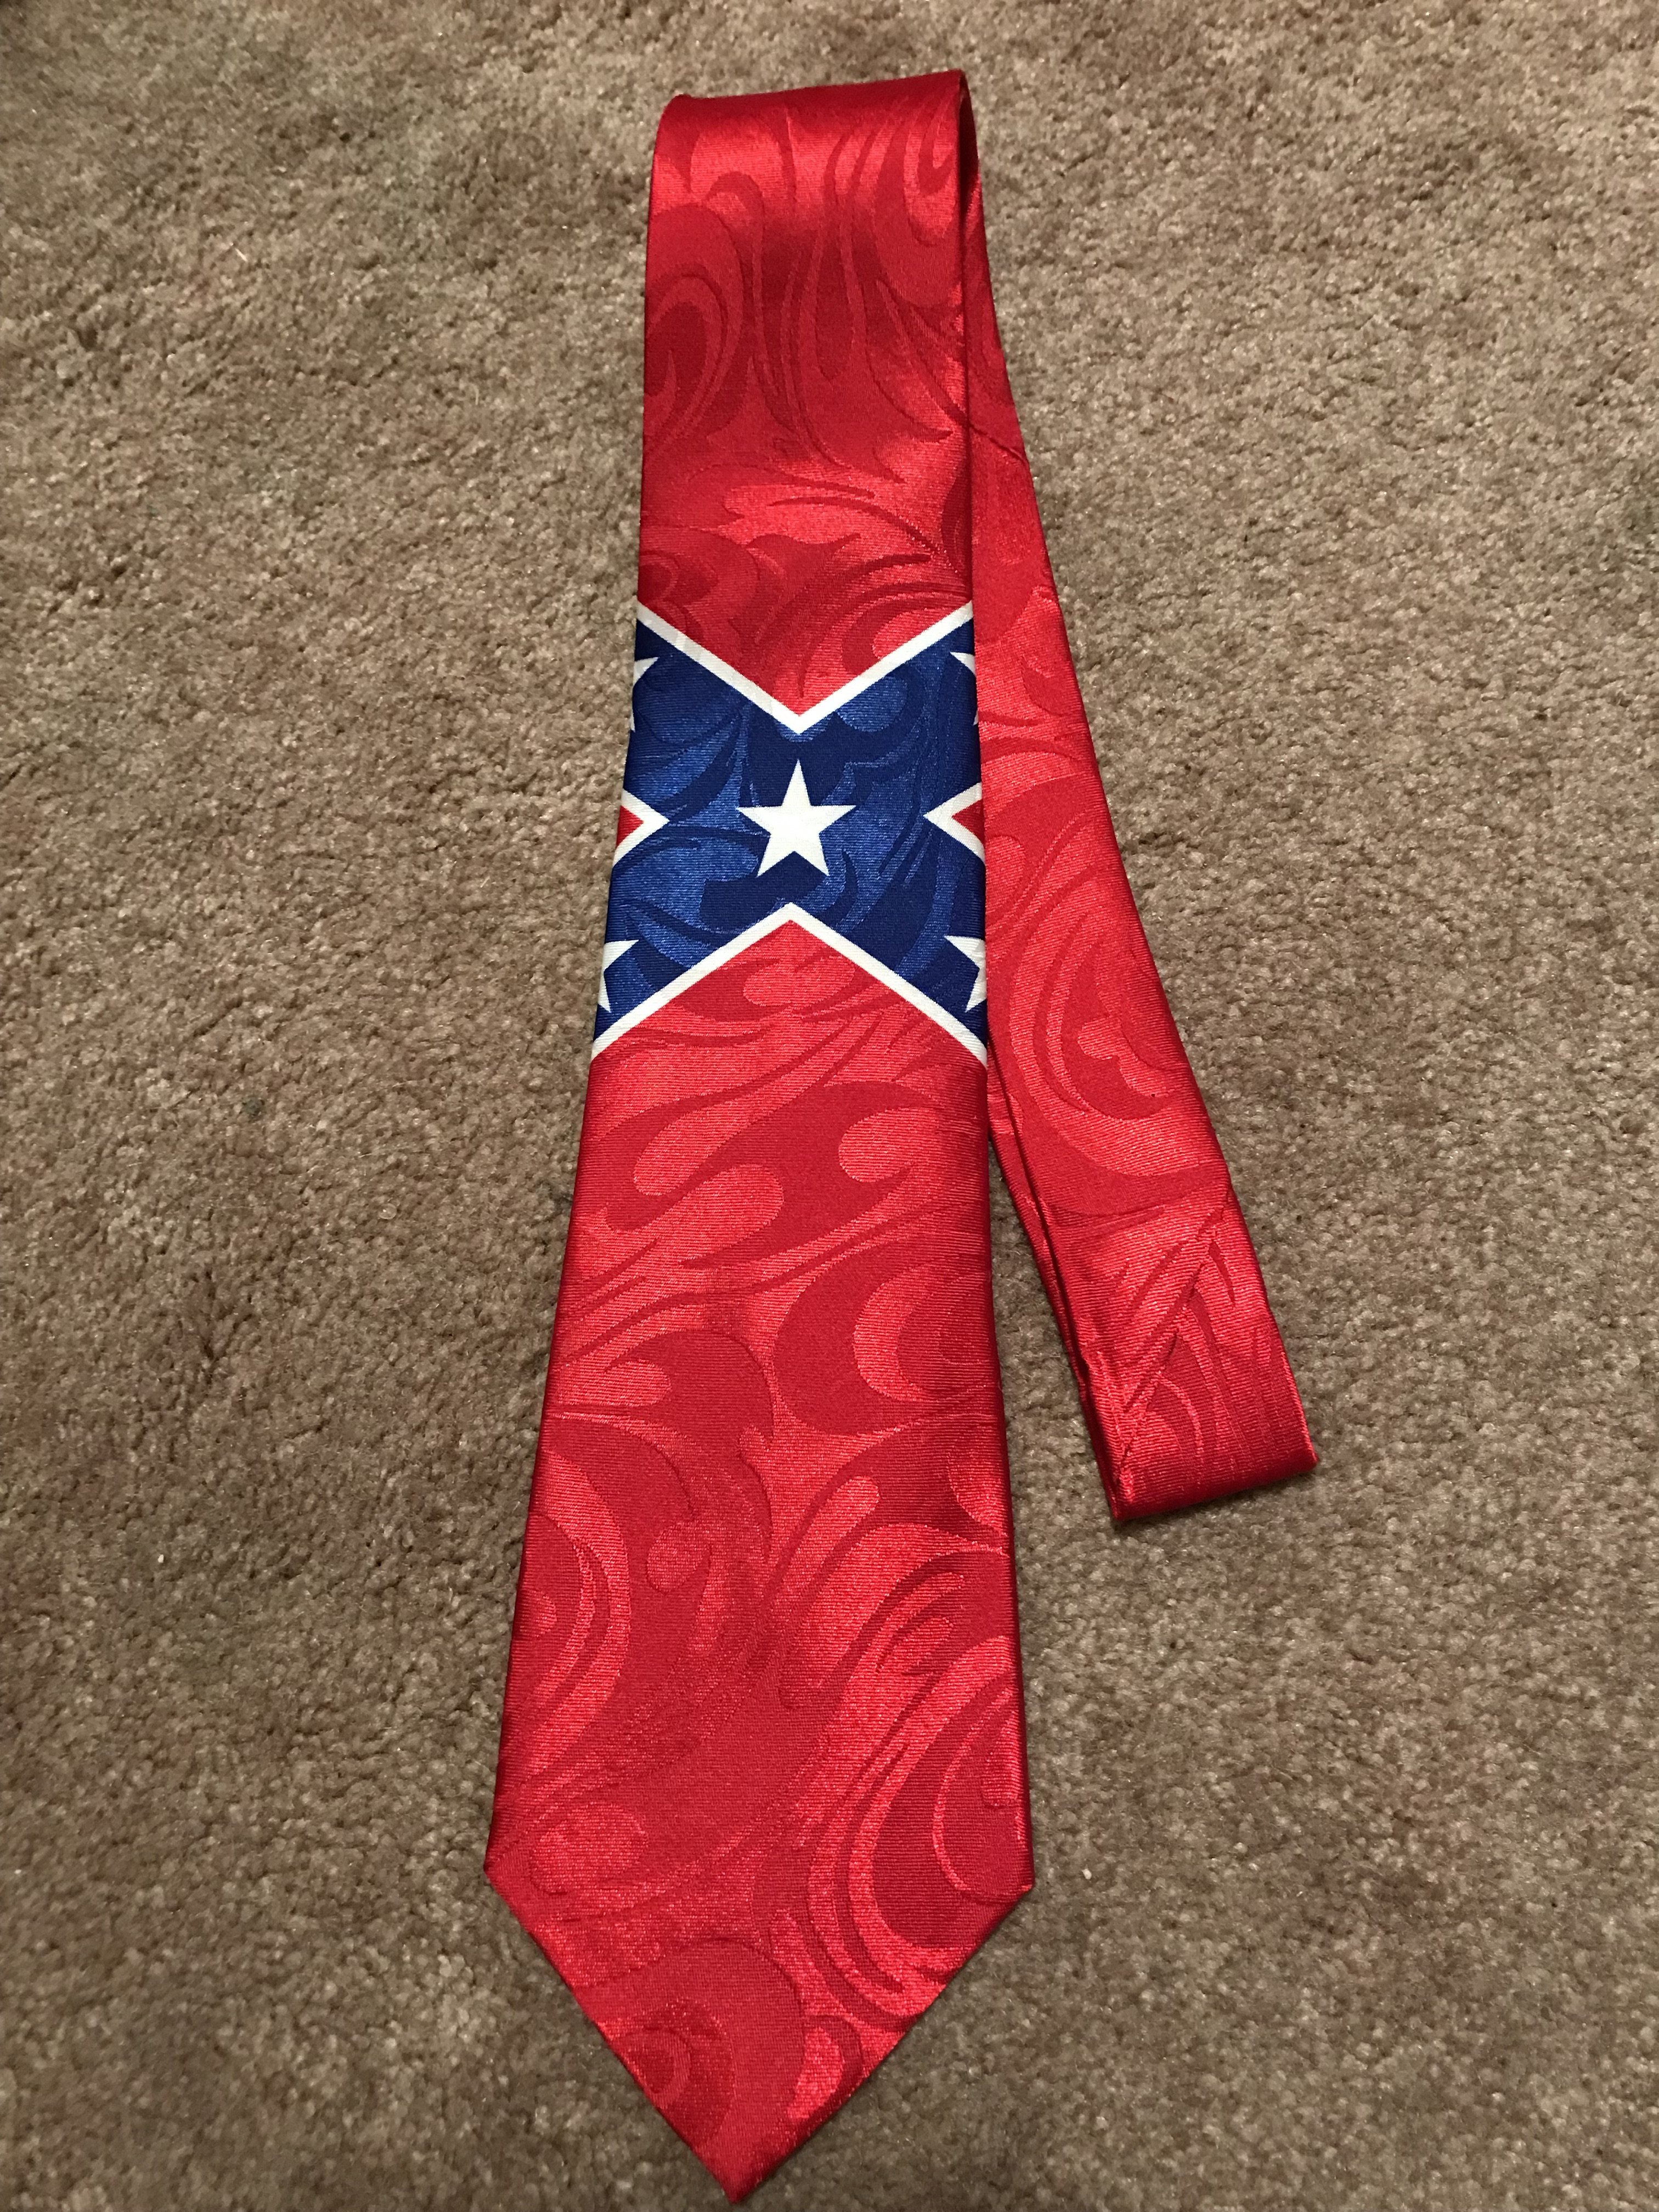 Confederate Flag Necktie